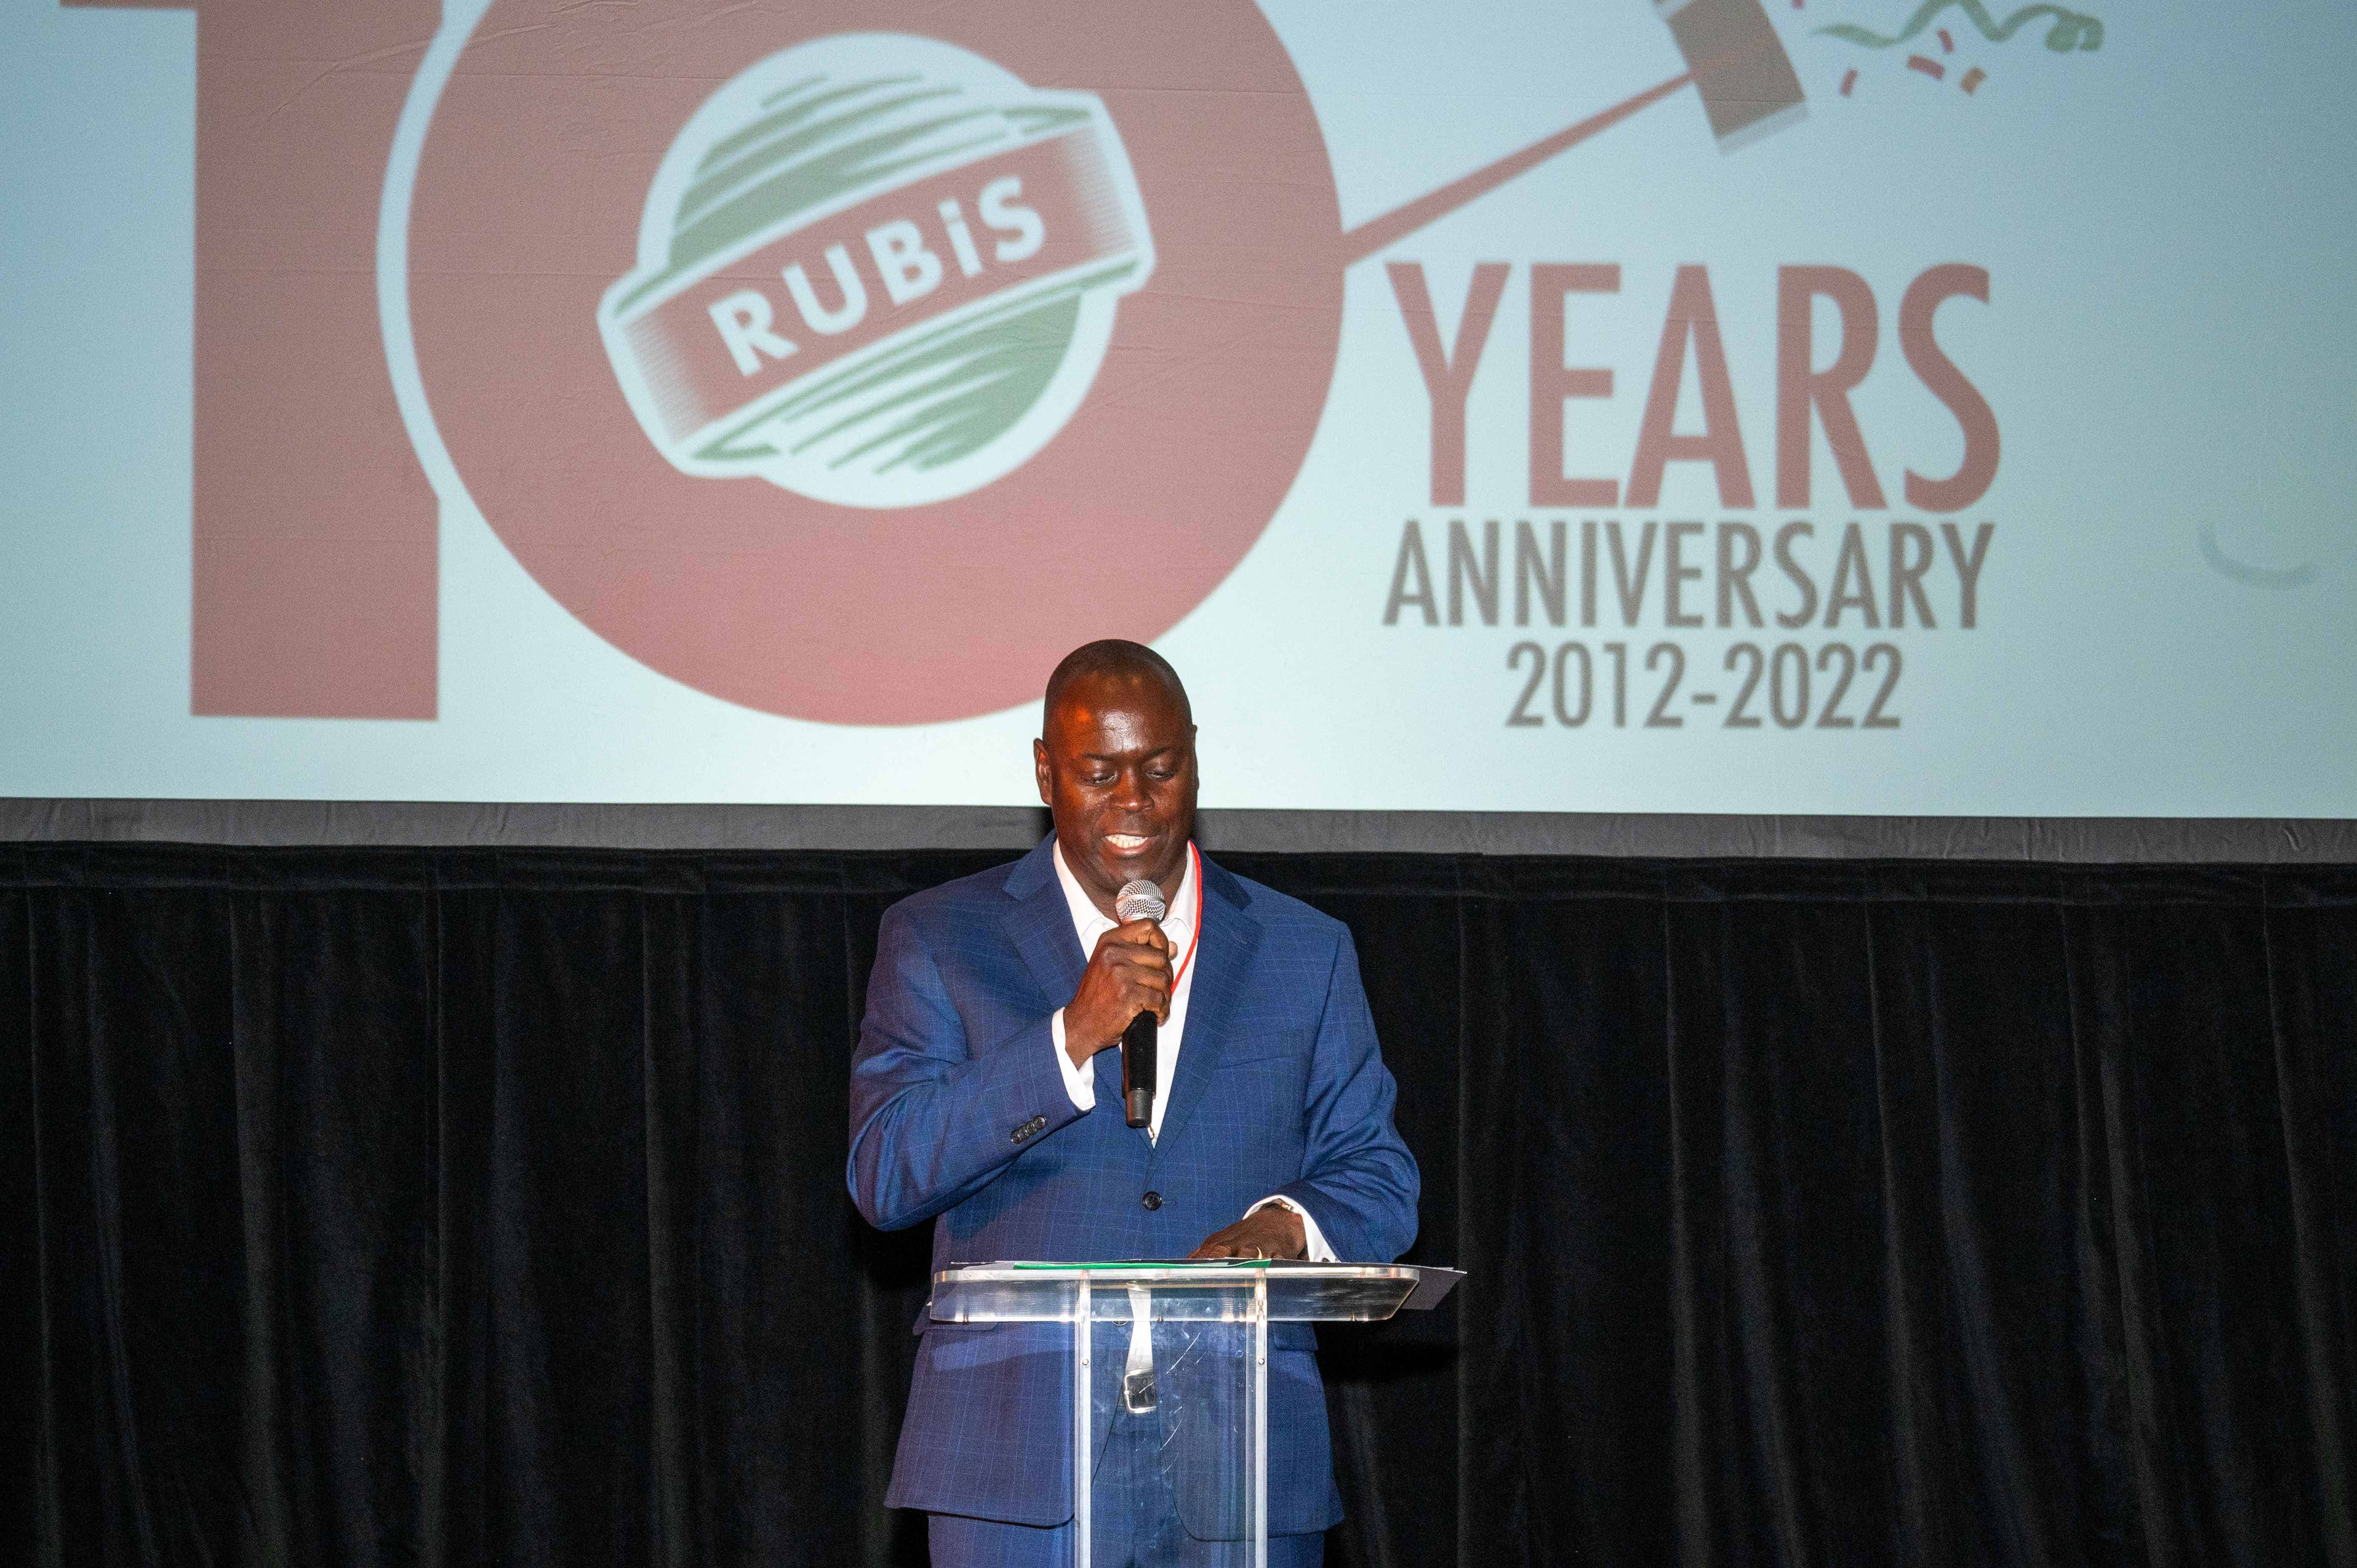 Rubis 10th Anniversary Event